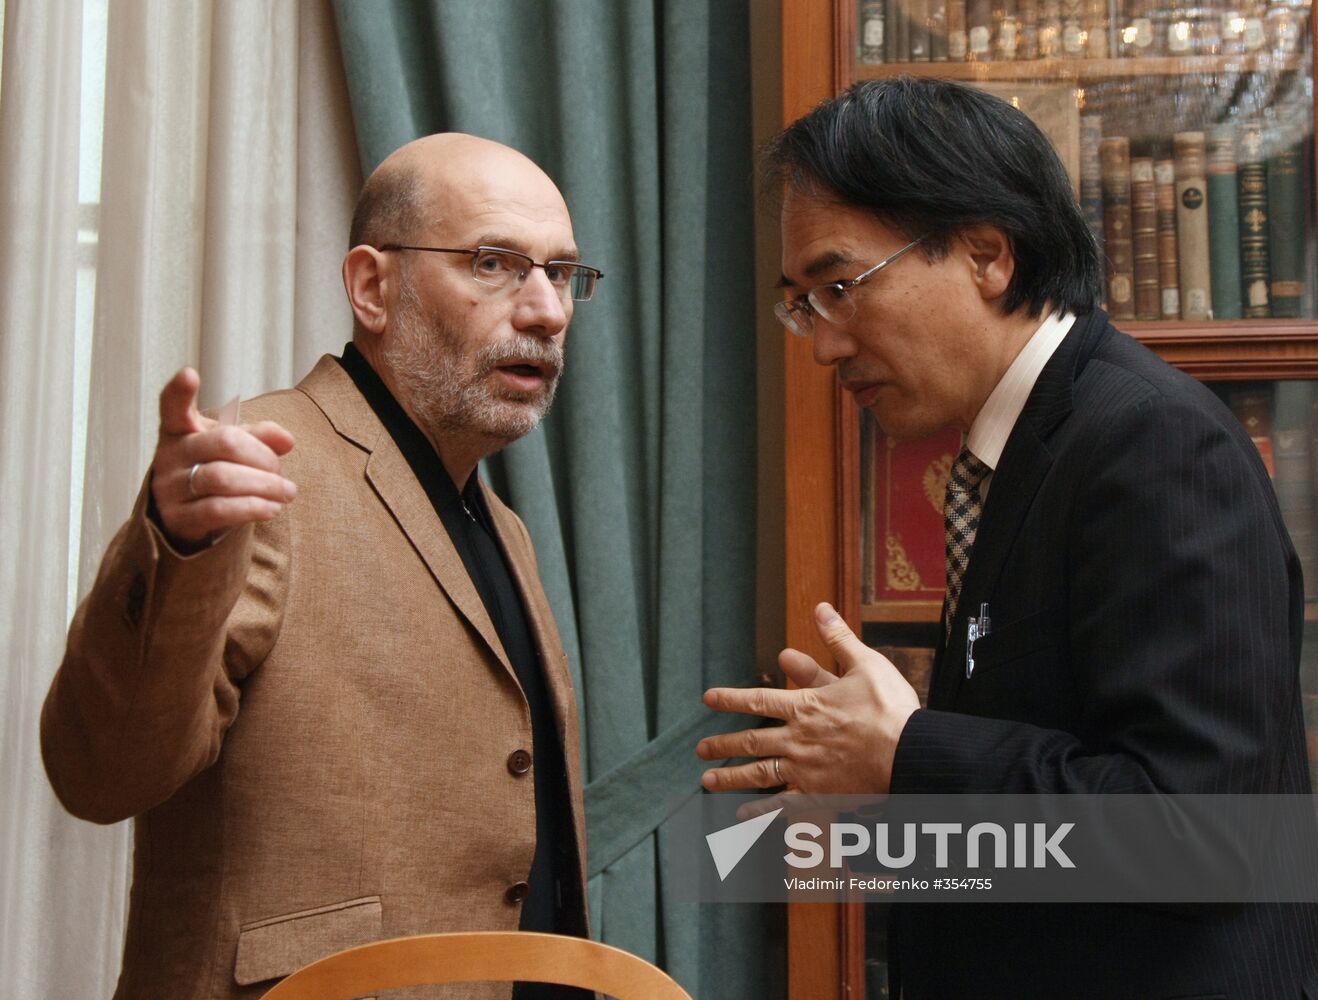 News conference given by Ikuo Kameyama and Boris Akunin